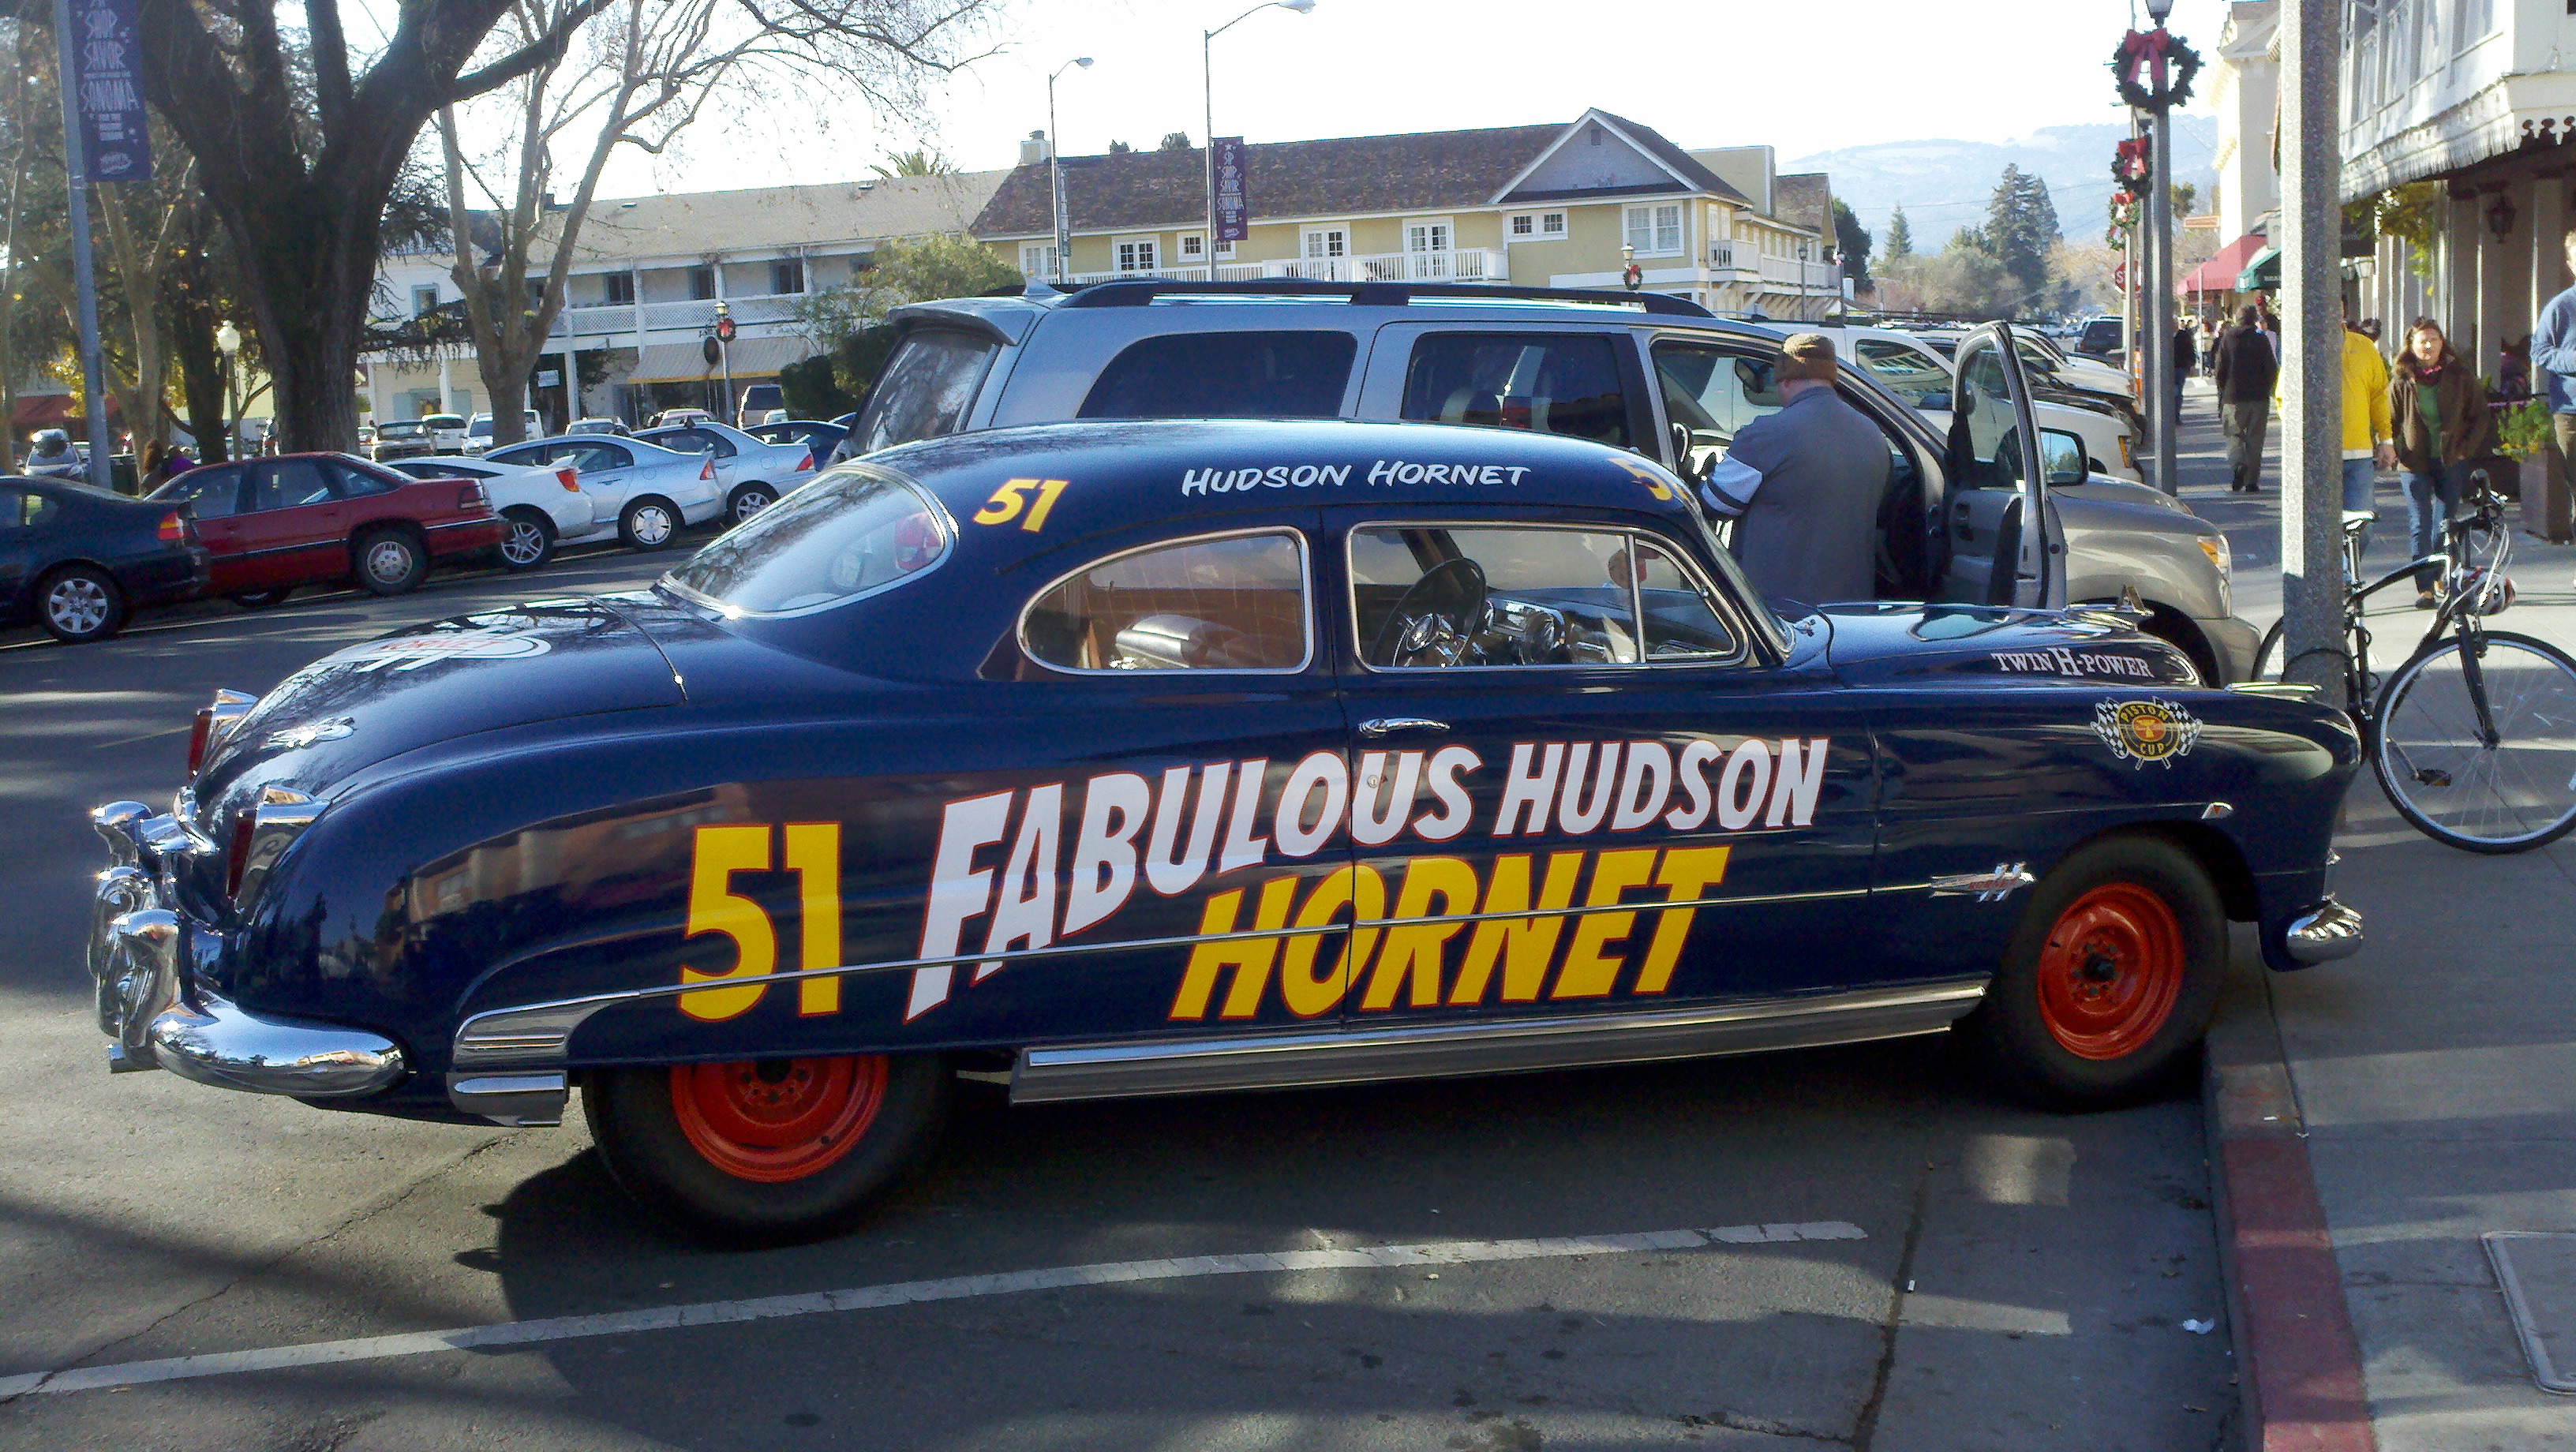 File:Hudson Hornet 51.jpg - Wikipedia, the free encyclopedia